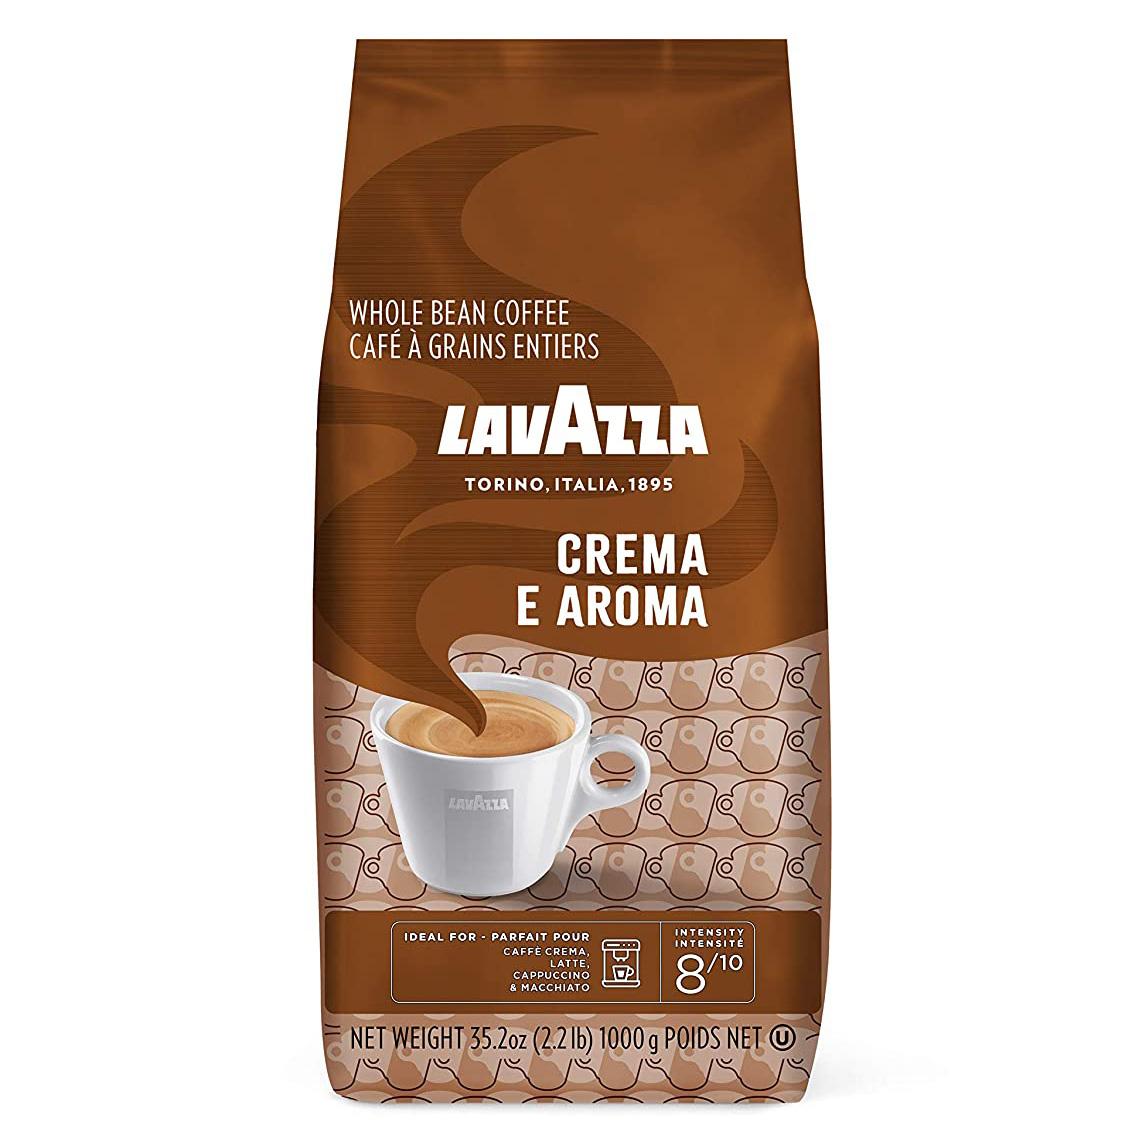 2.2lbs Lavazza Medium Roast Whole Bean Coffee for $8.39 Shipped